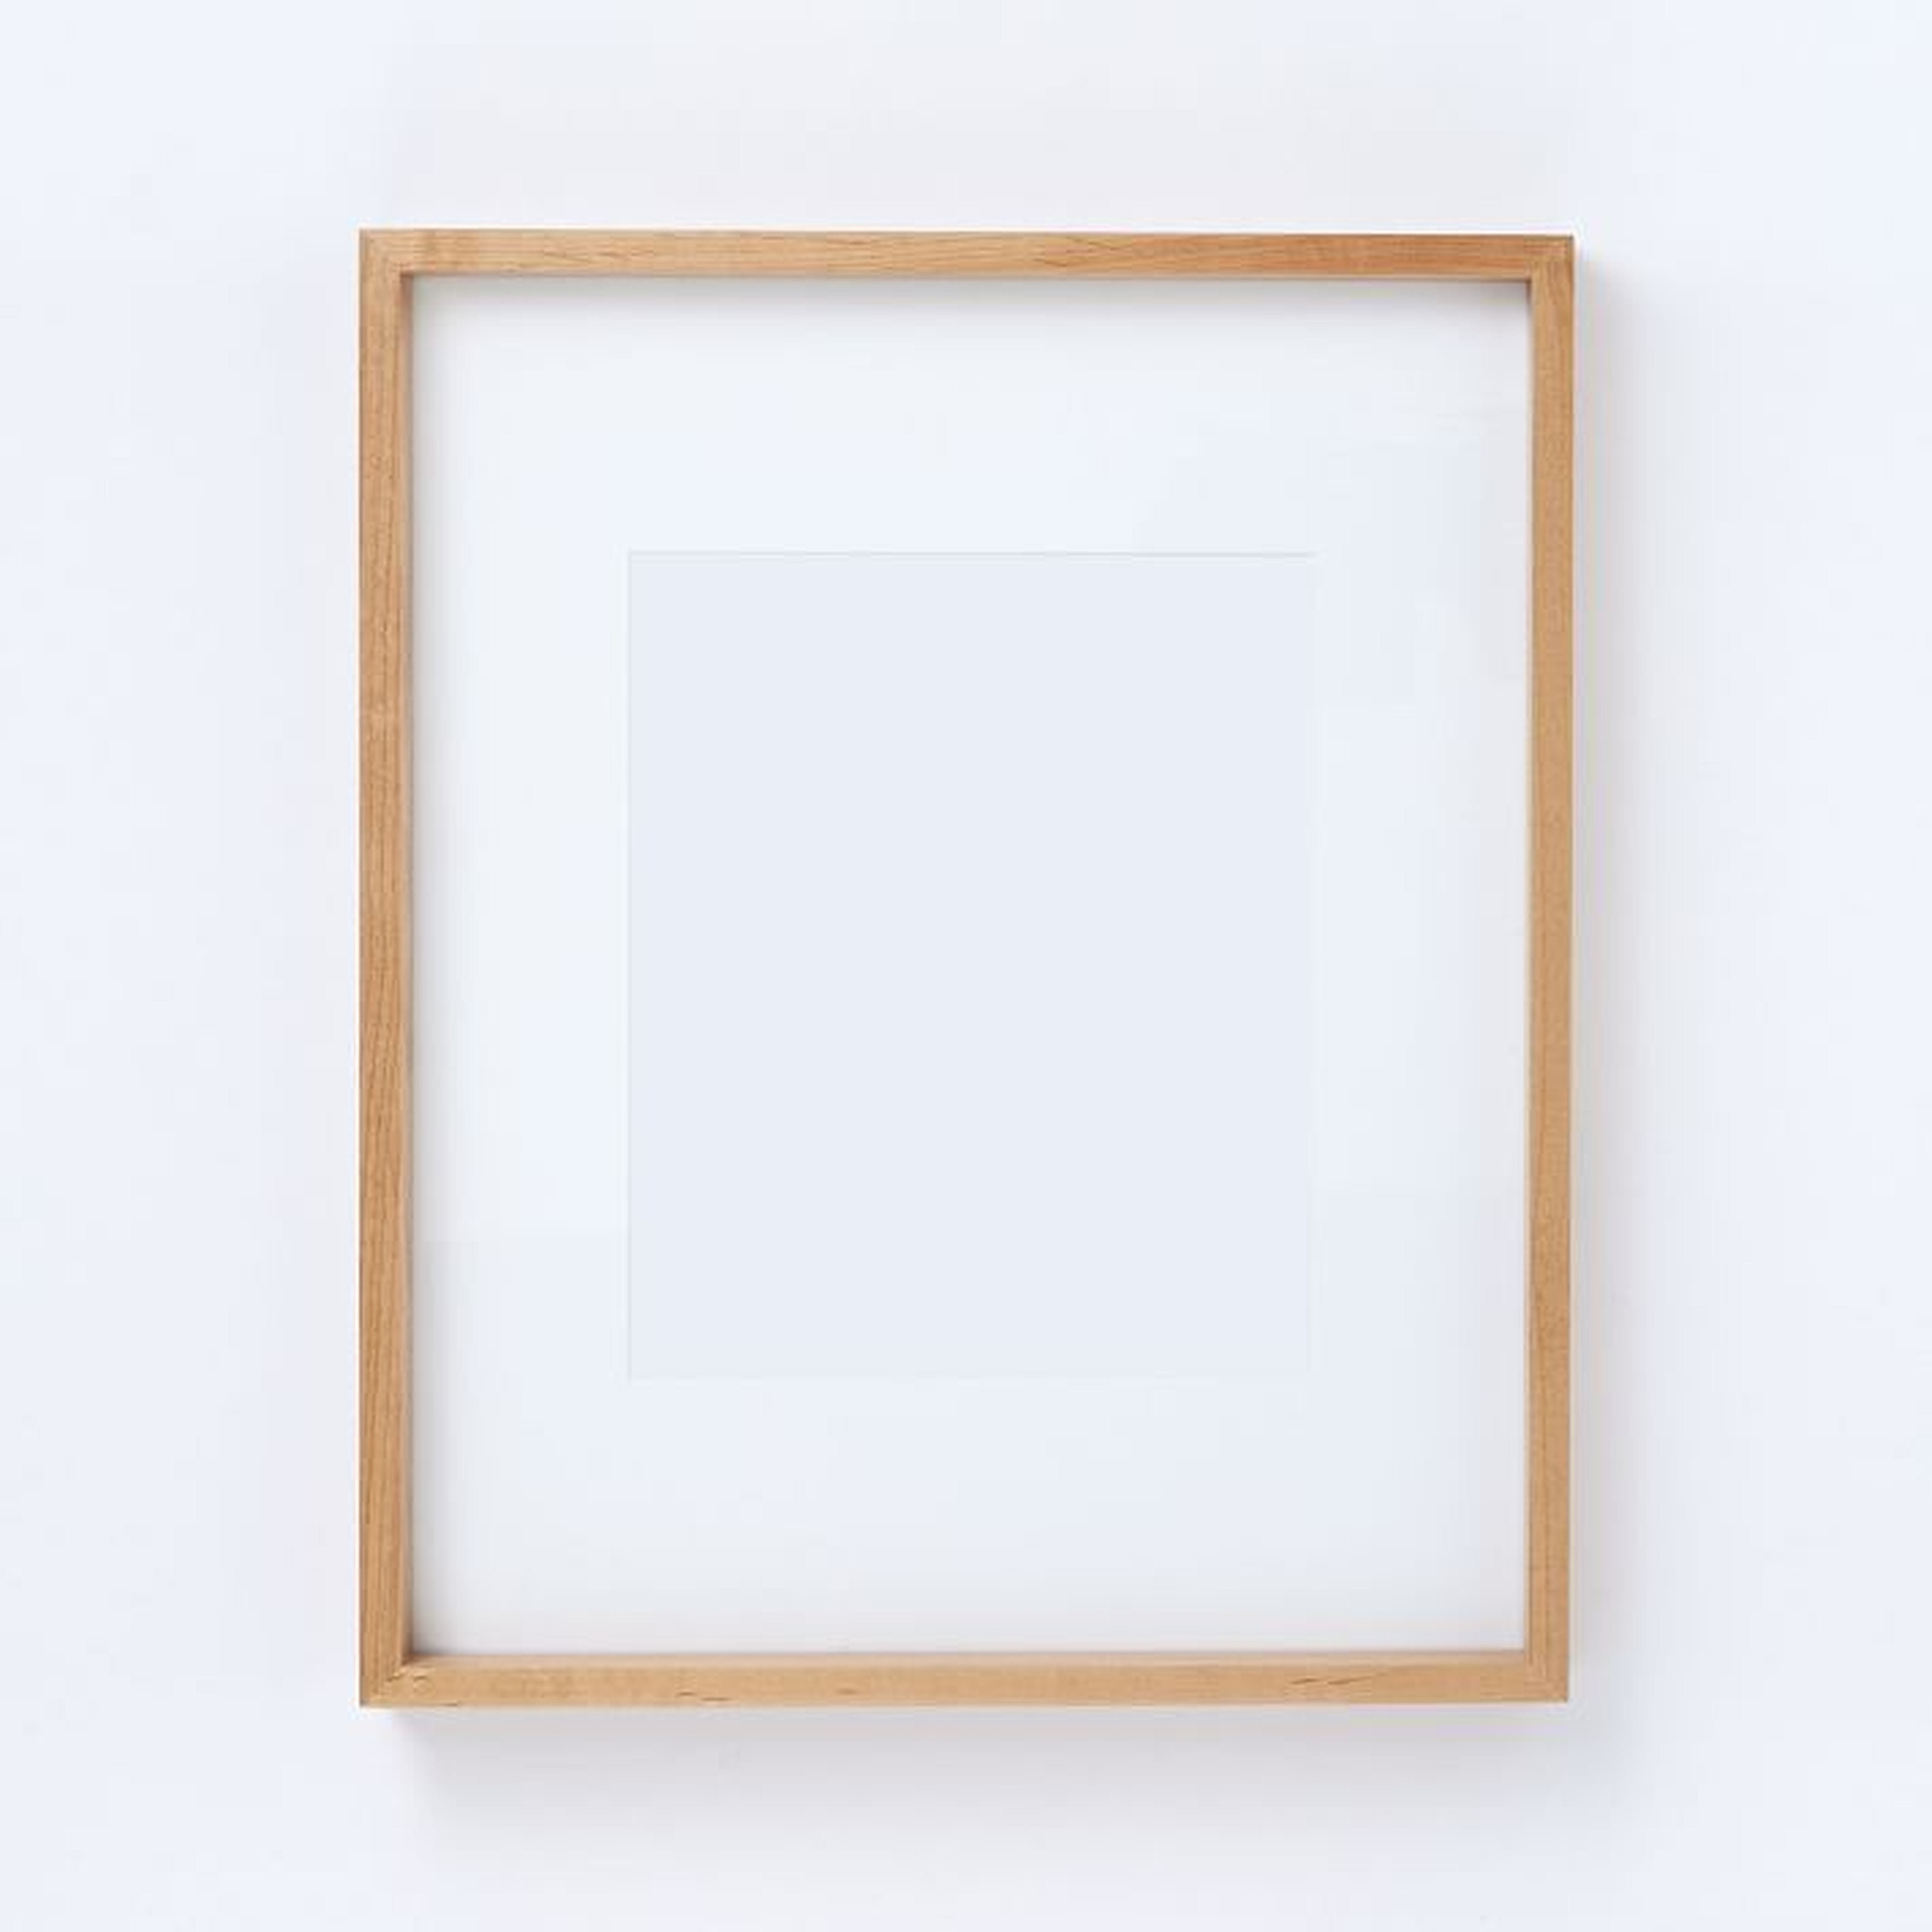 Wood Gallery Frames - Oversized Mat_wheat - West Elm